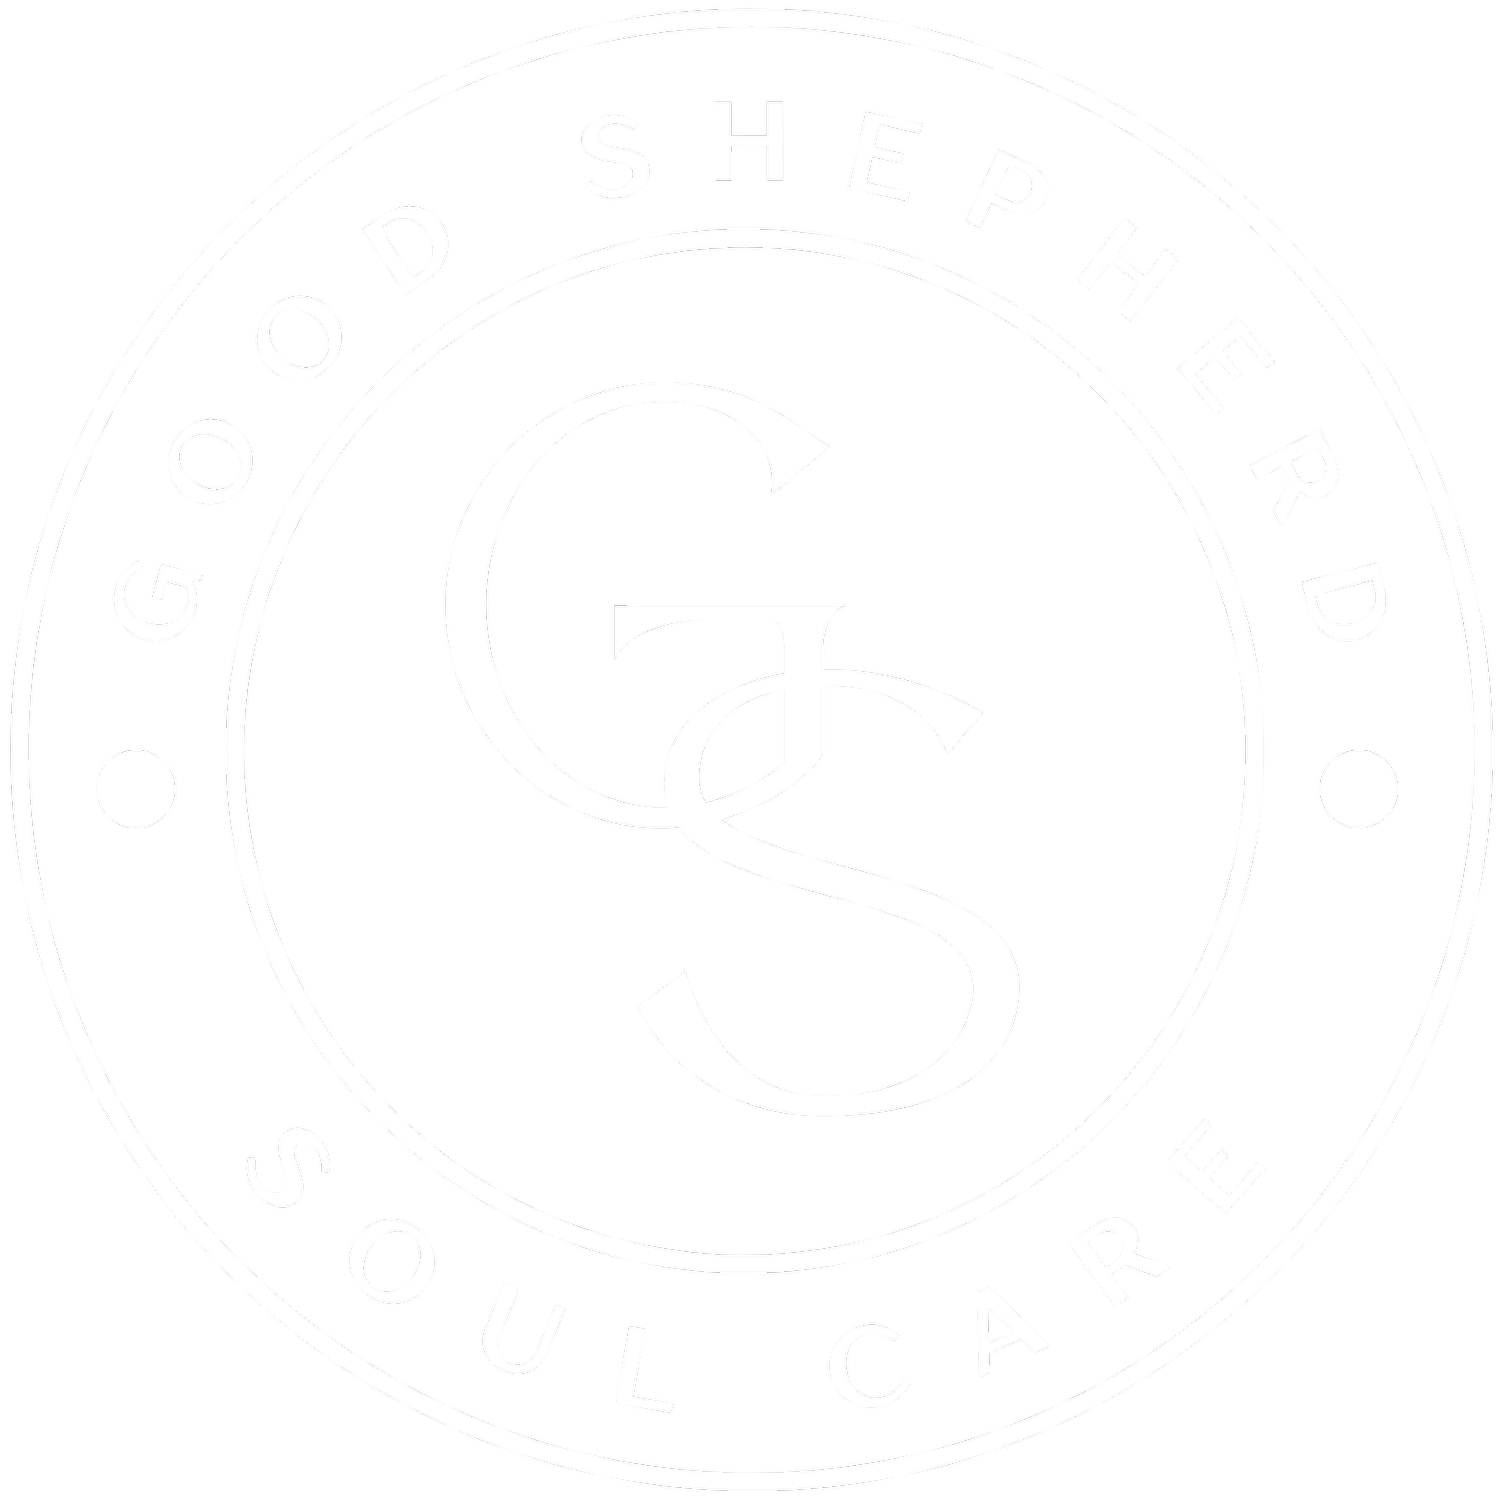 Good Shepherd Soul Care